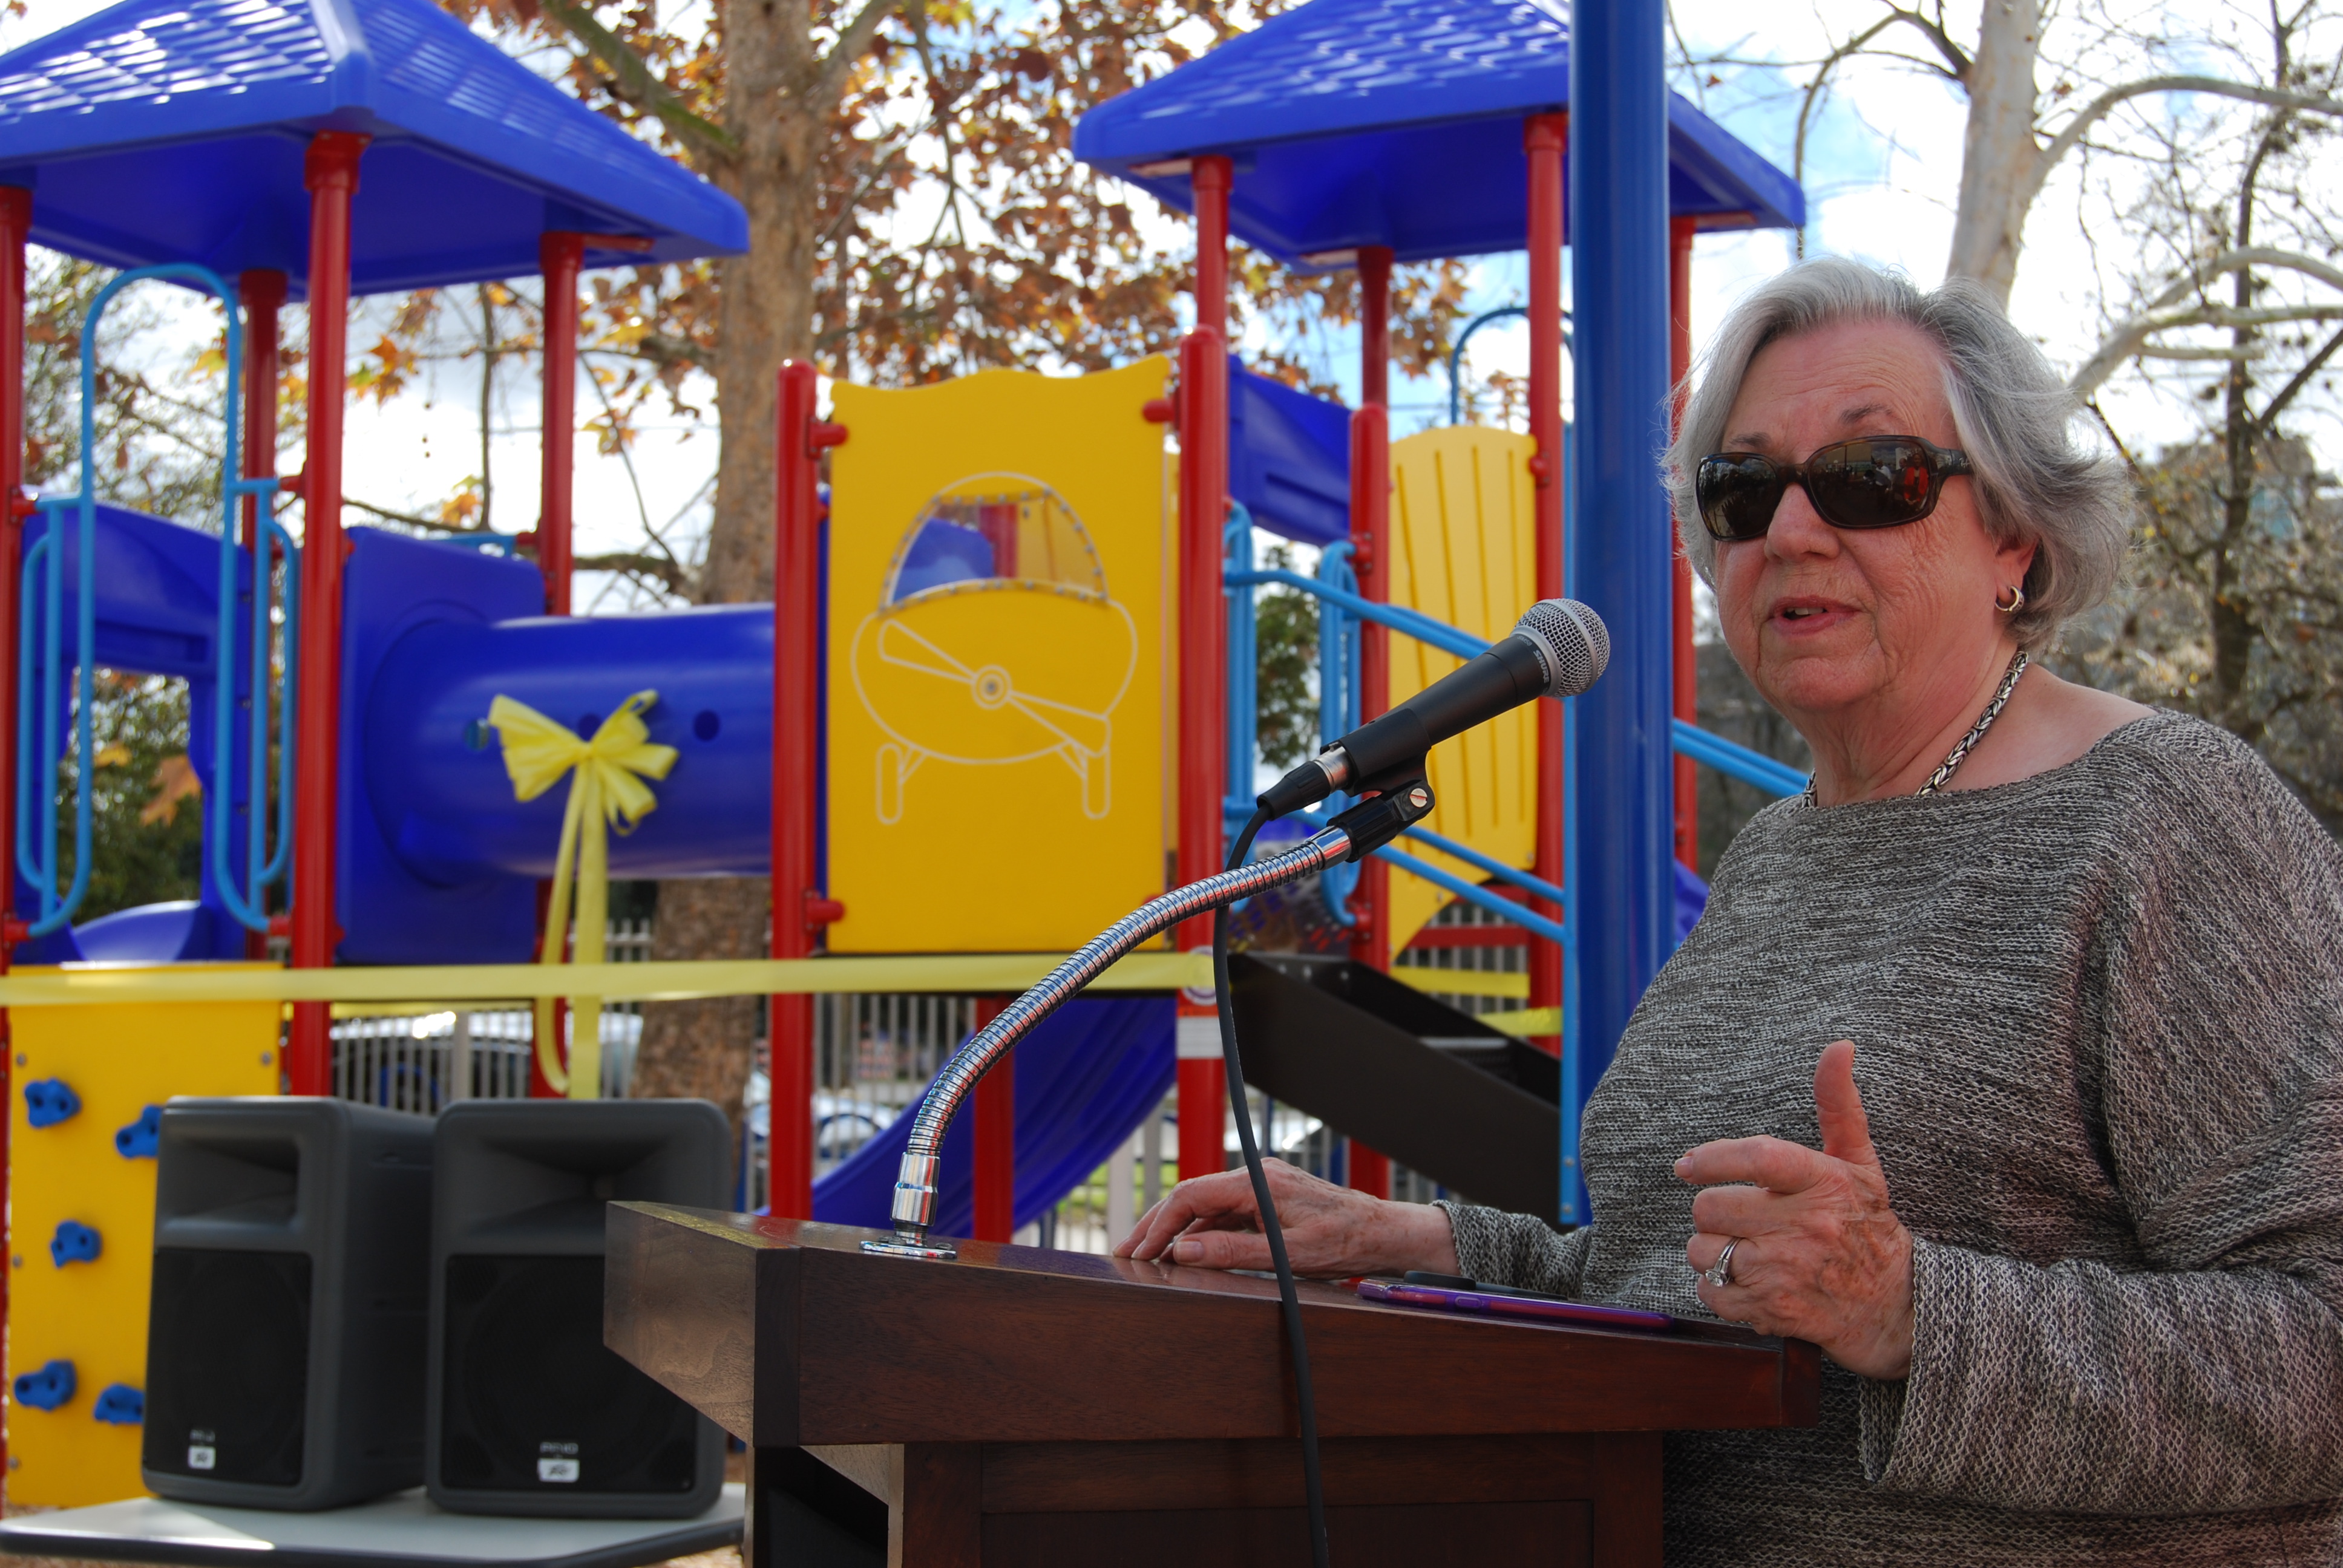 Speaker at Playground Unveiling